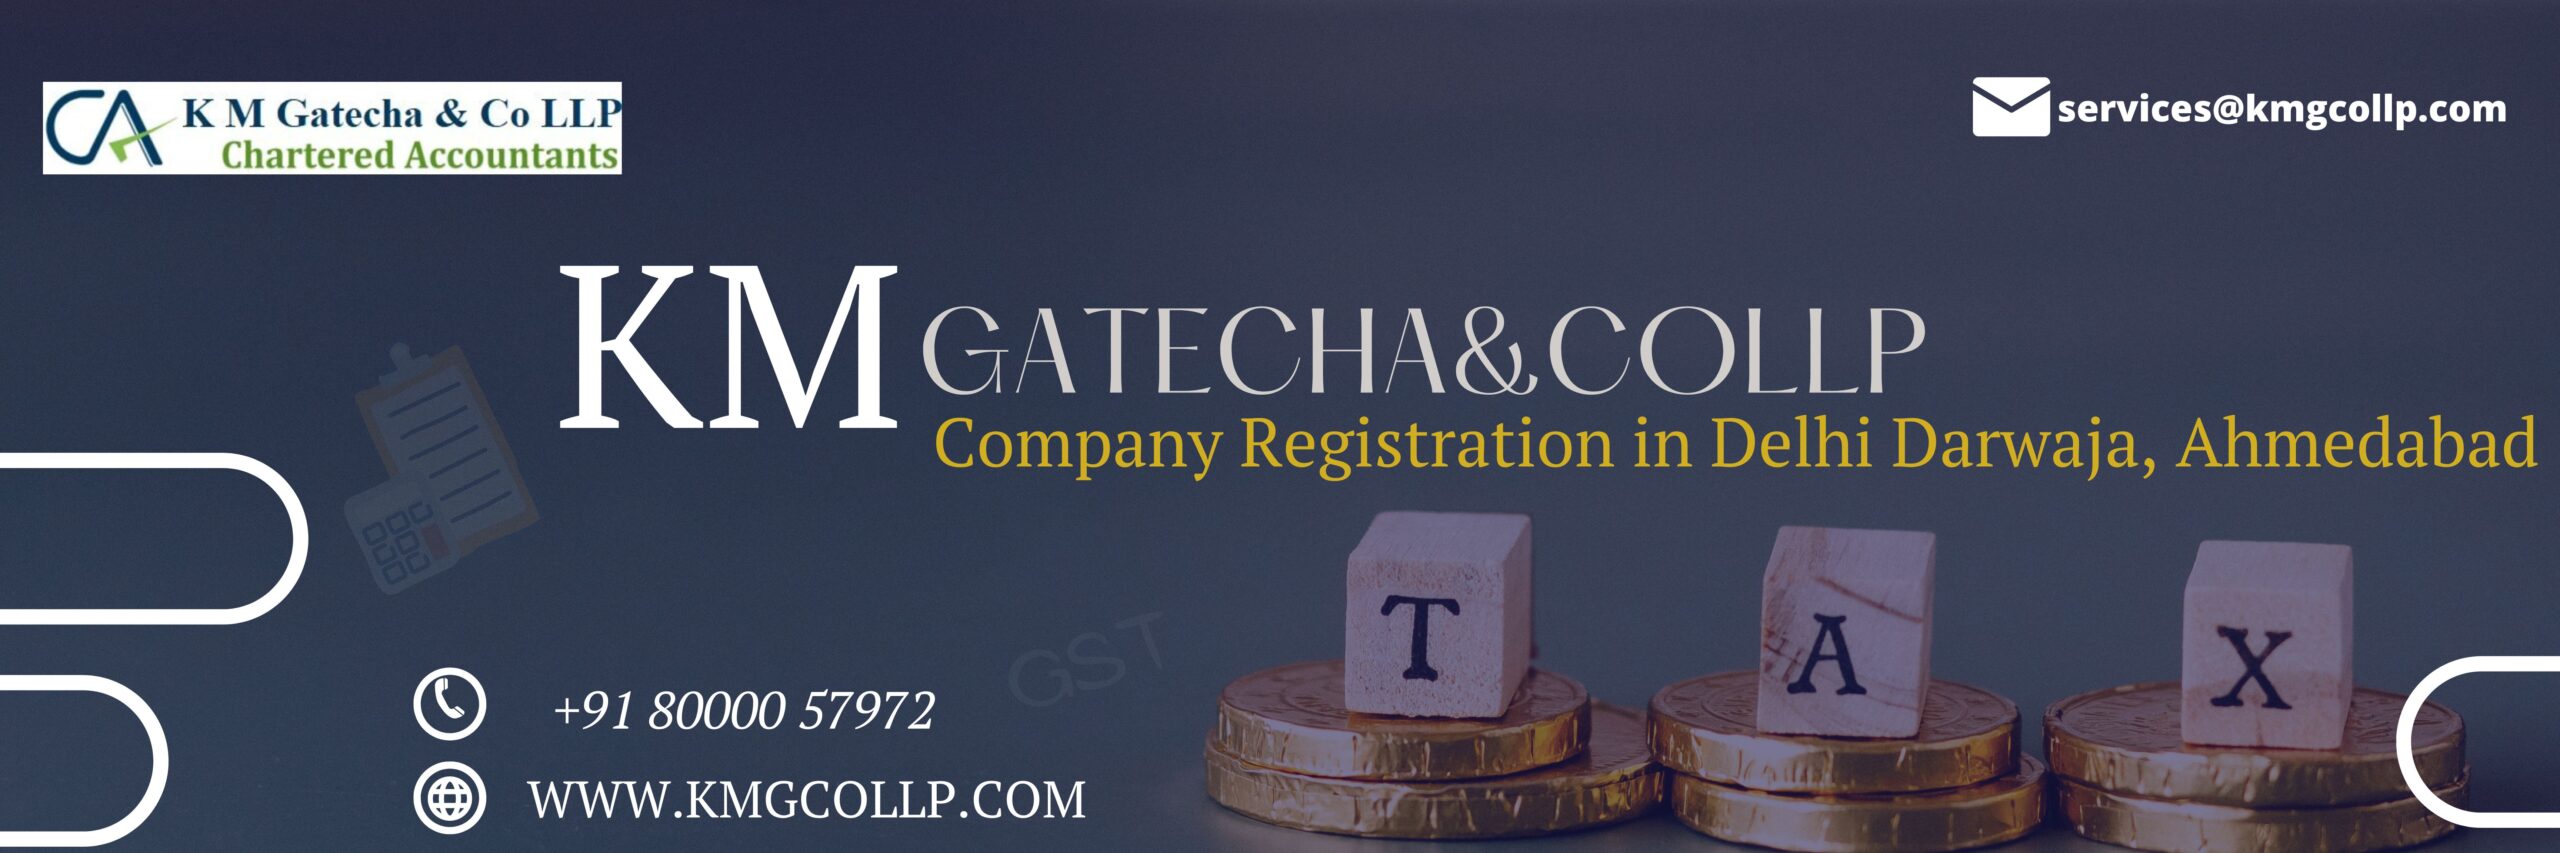 Company Registration in Delhi Darwaja, Ahmedabad